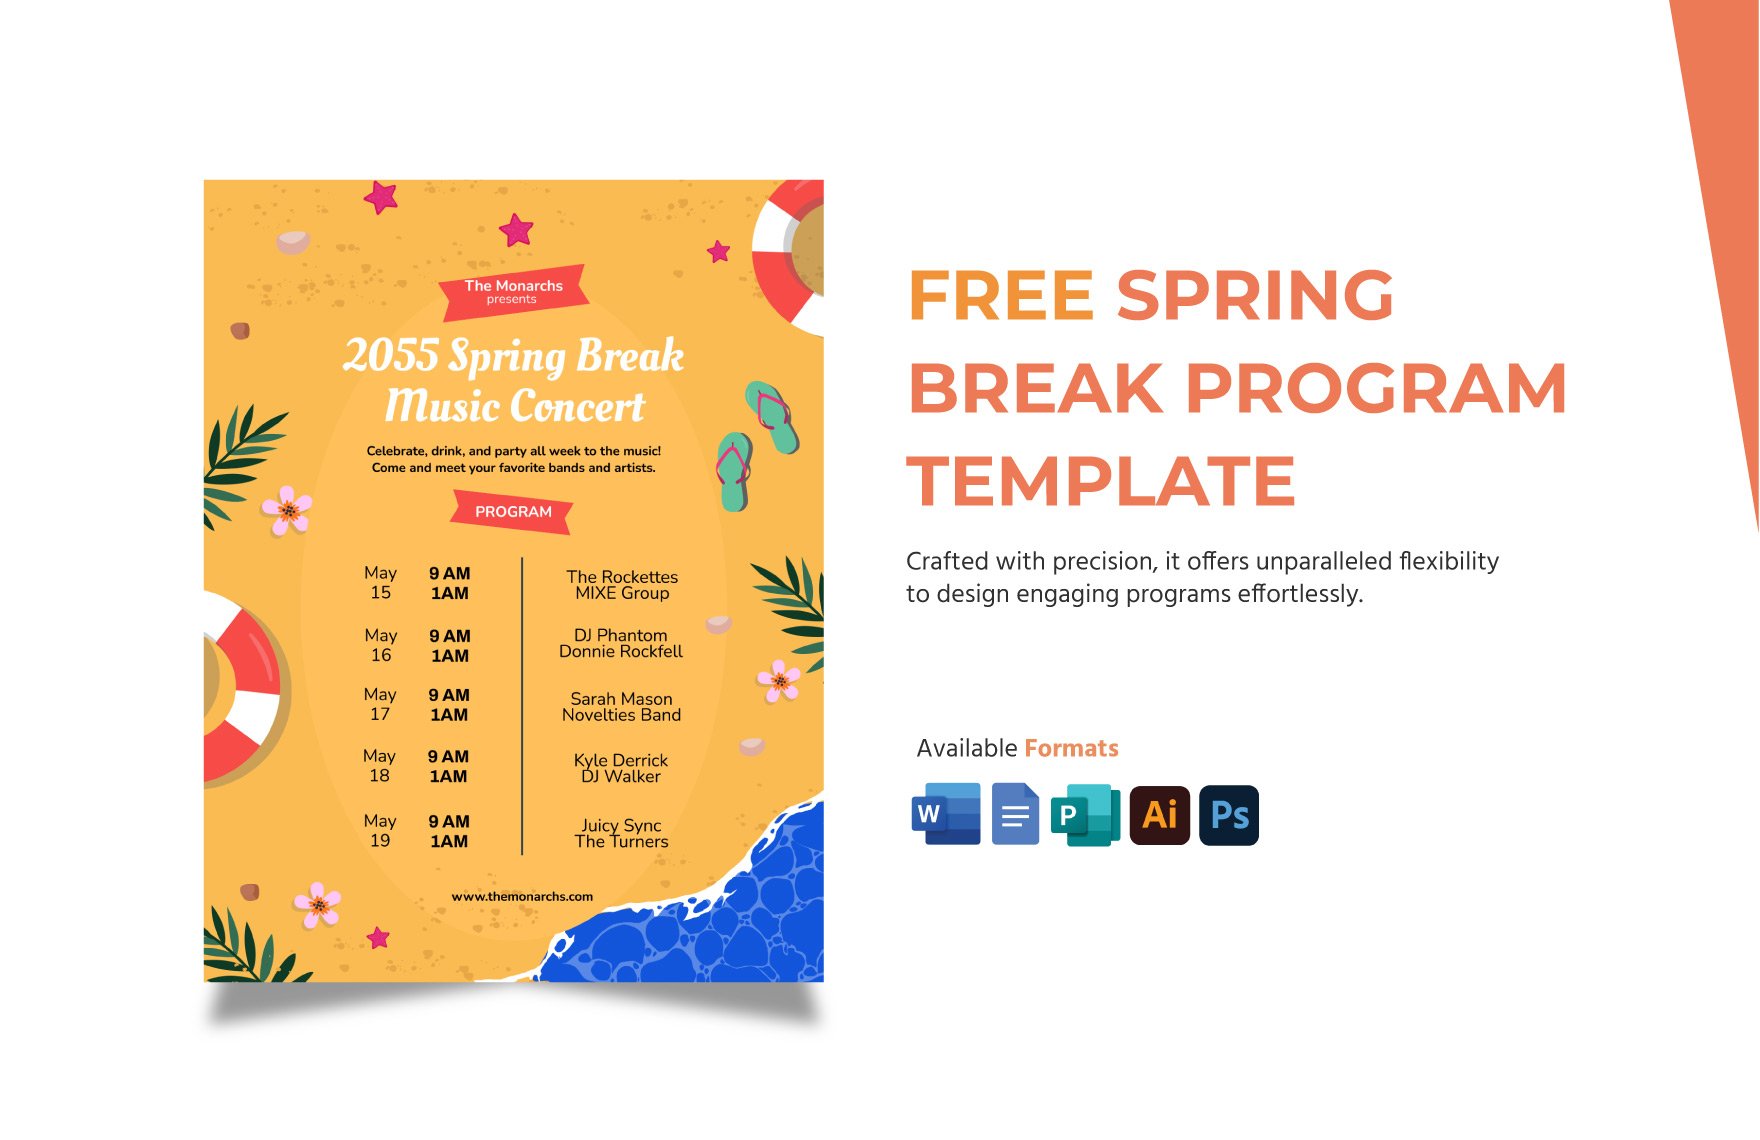 Free Spring Break Program